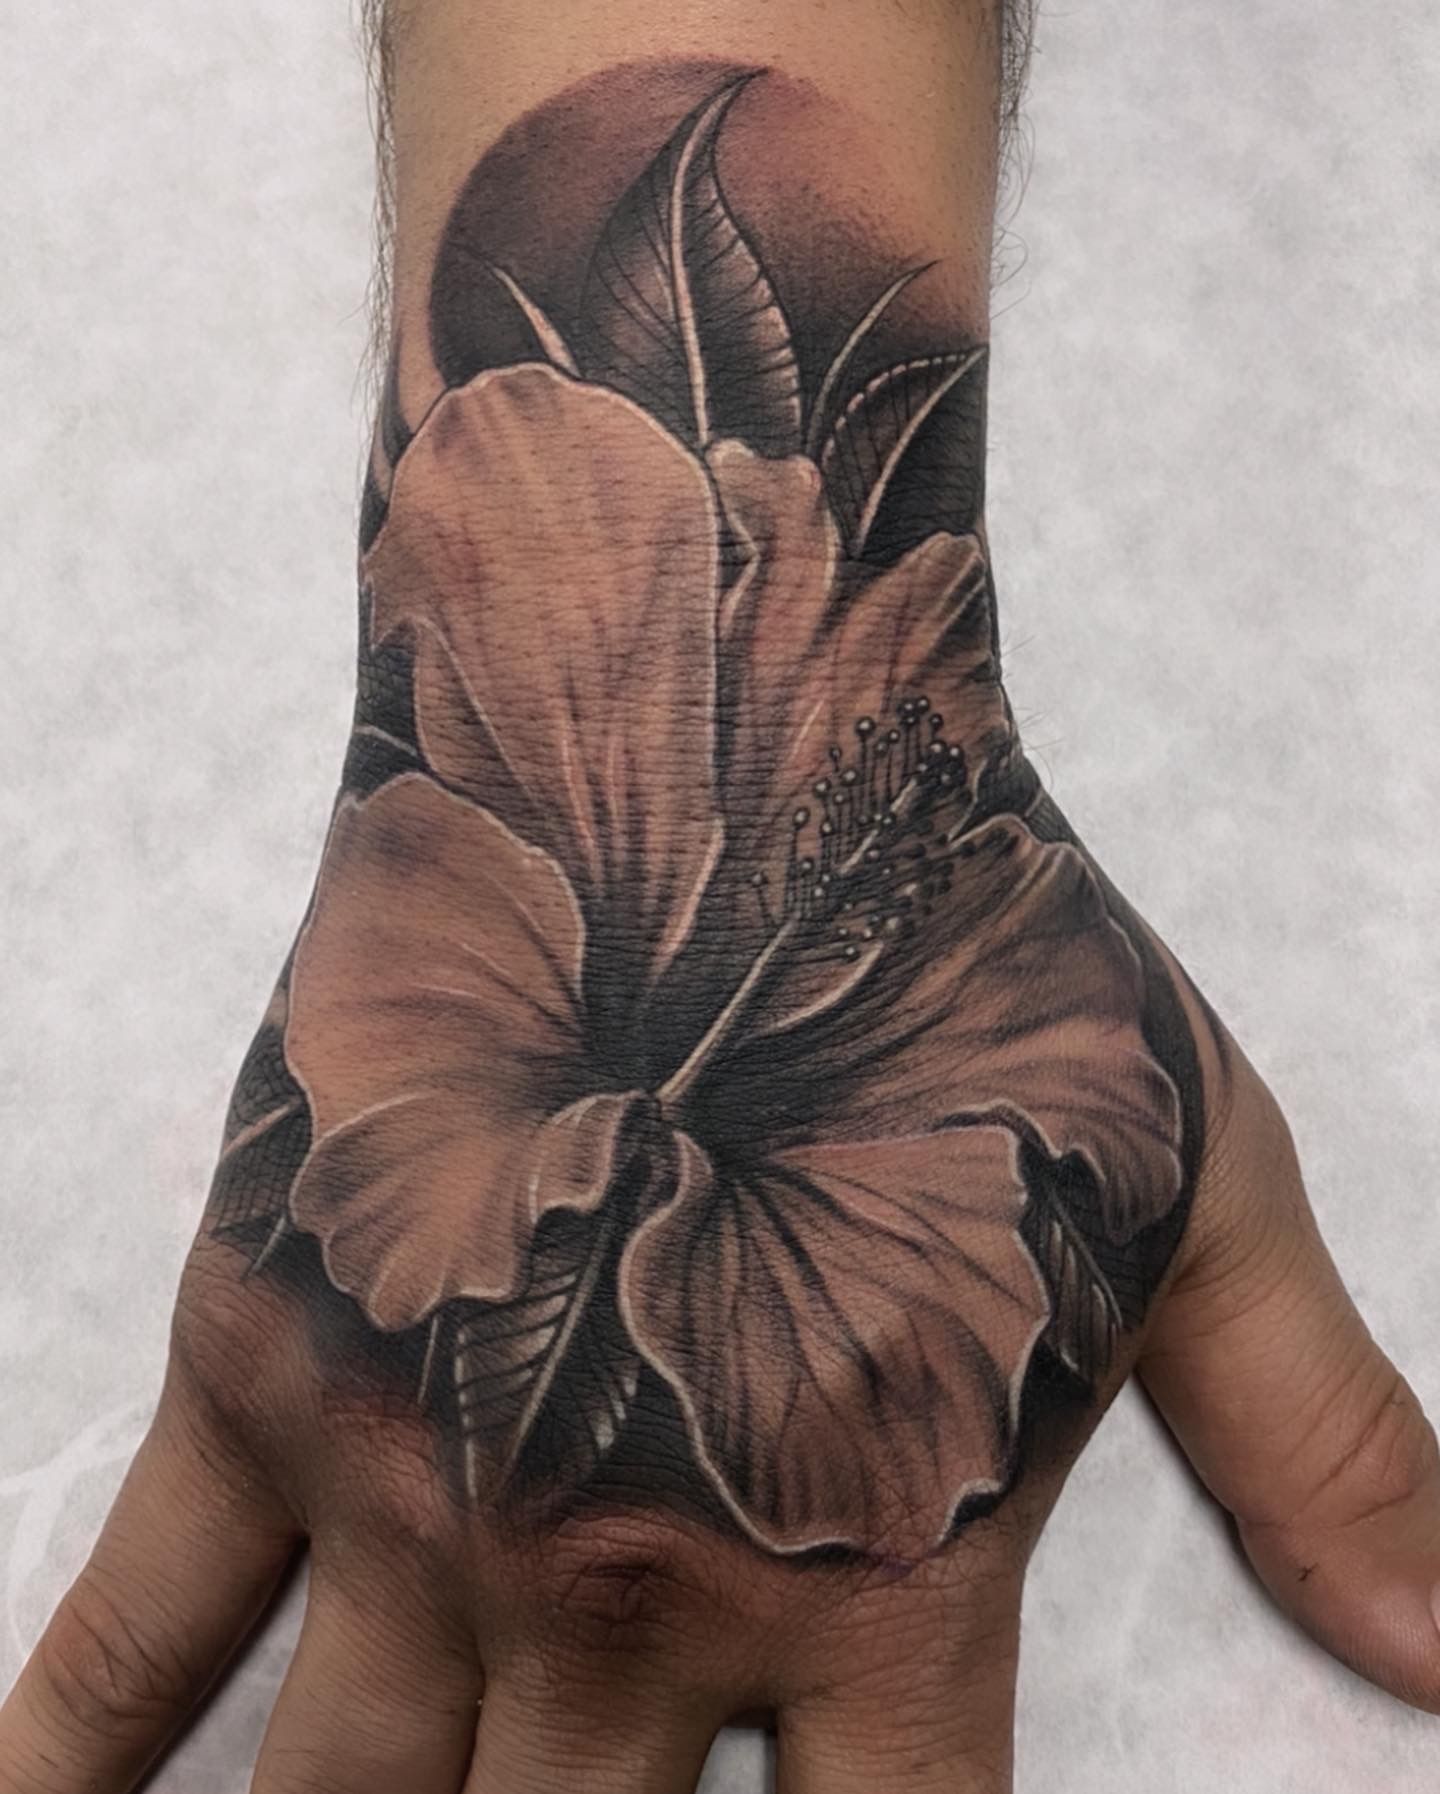 hibiscus foot tattoo